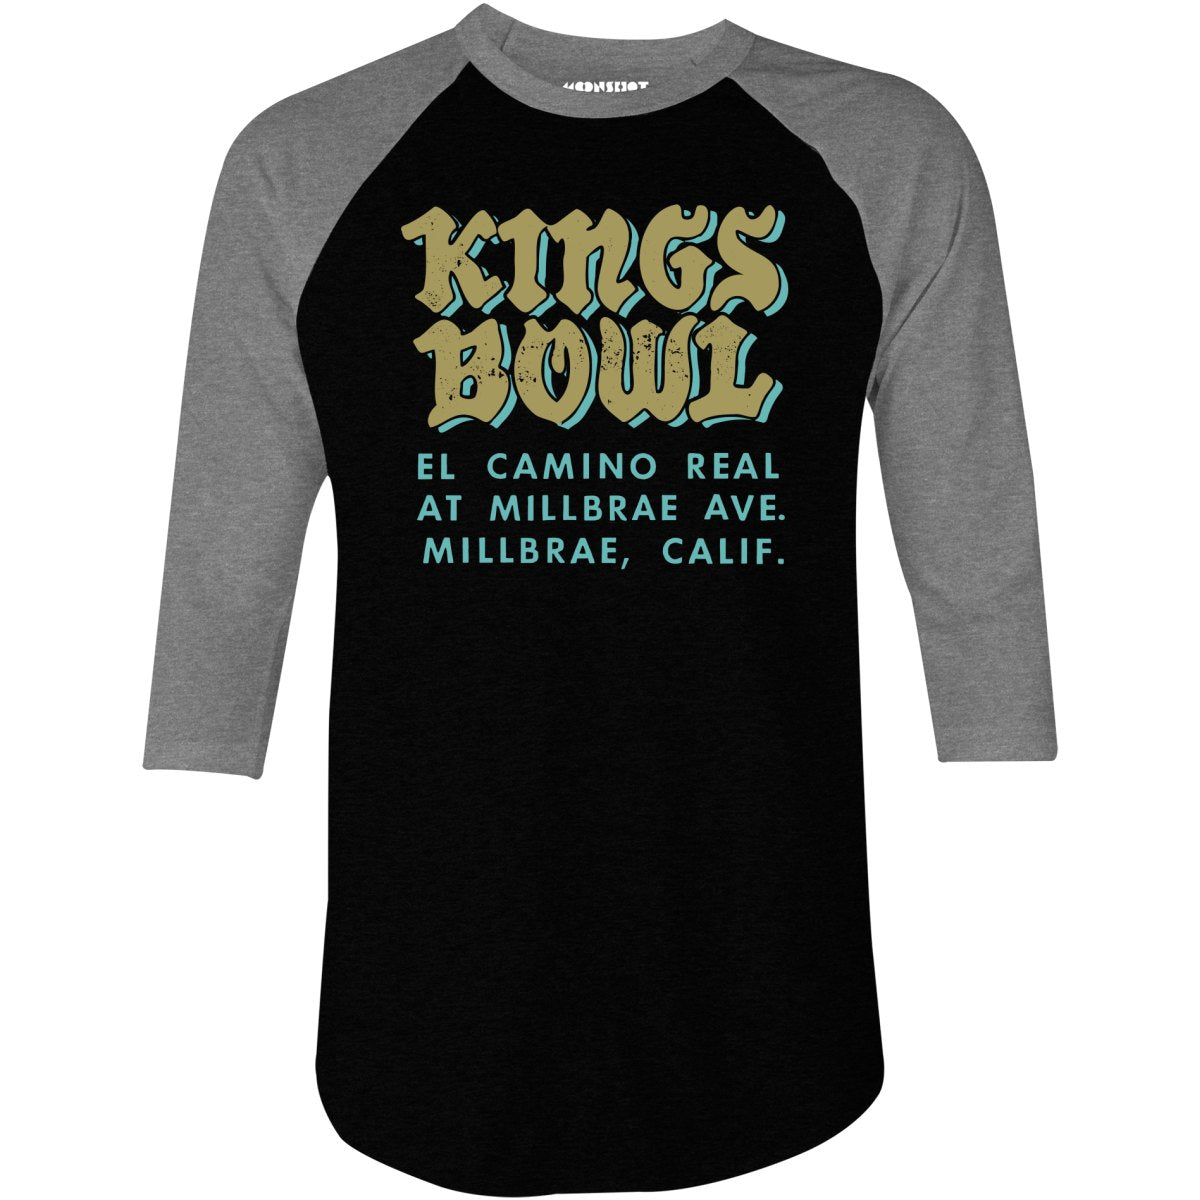 Kings Bowl - Millbrae, CA - Vintage Bowling Alley - 3/4 Sleeve Raglan T-Shirt